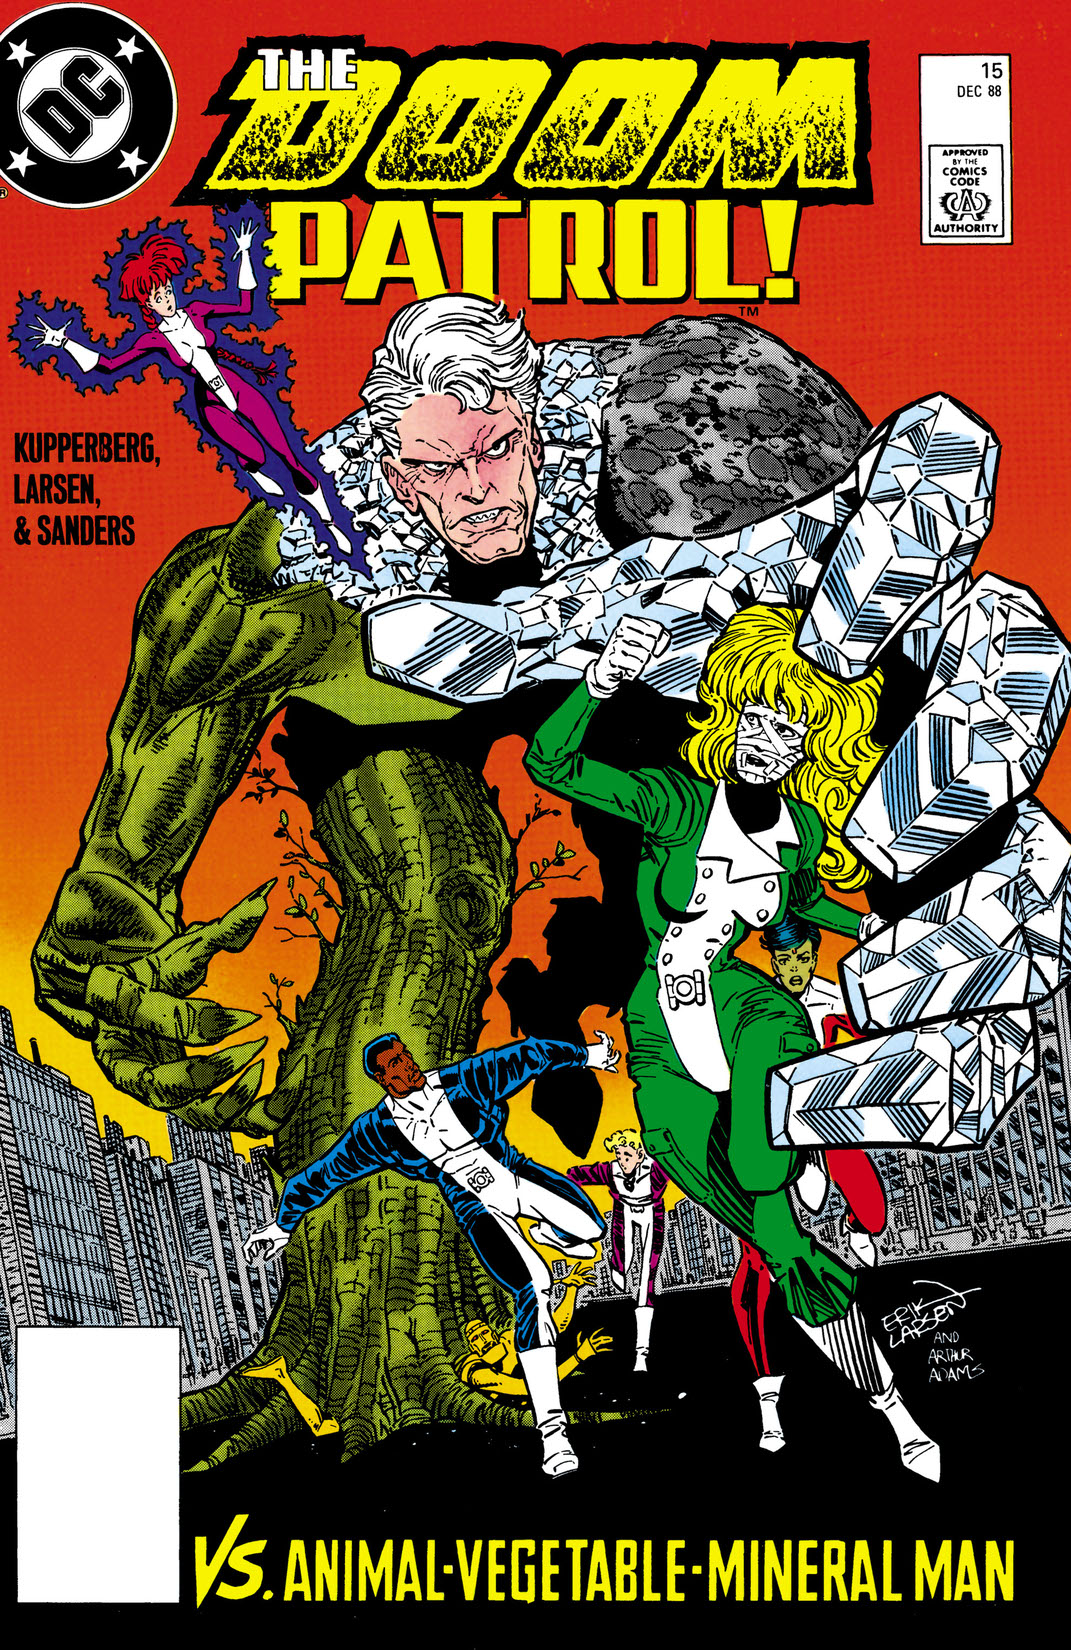 Doom Patrol (1987-) #15 preview images